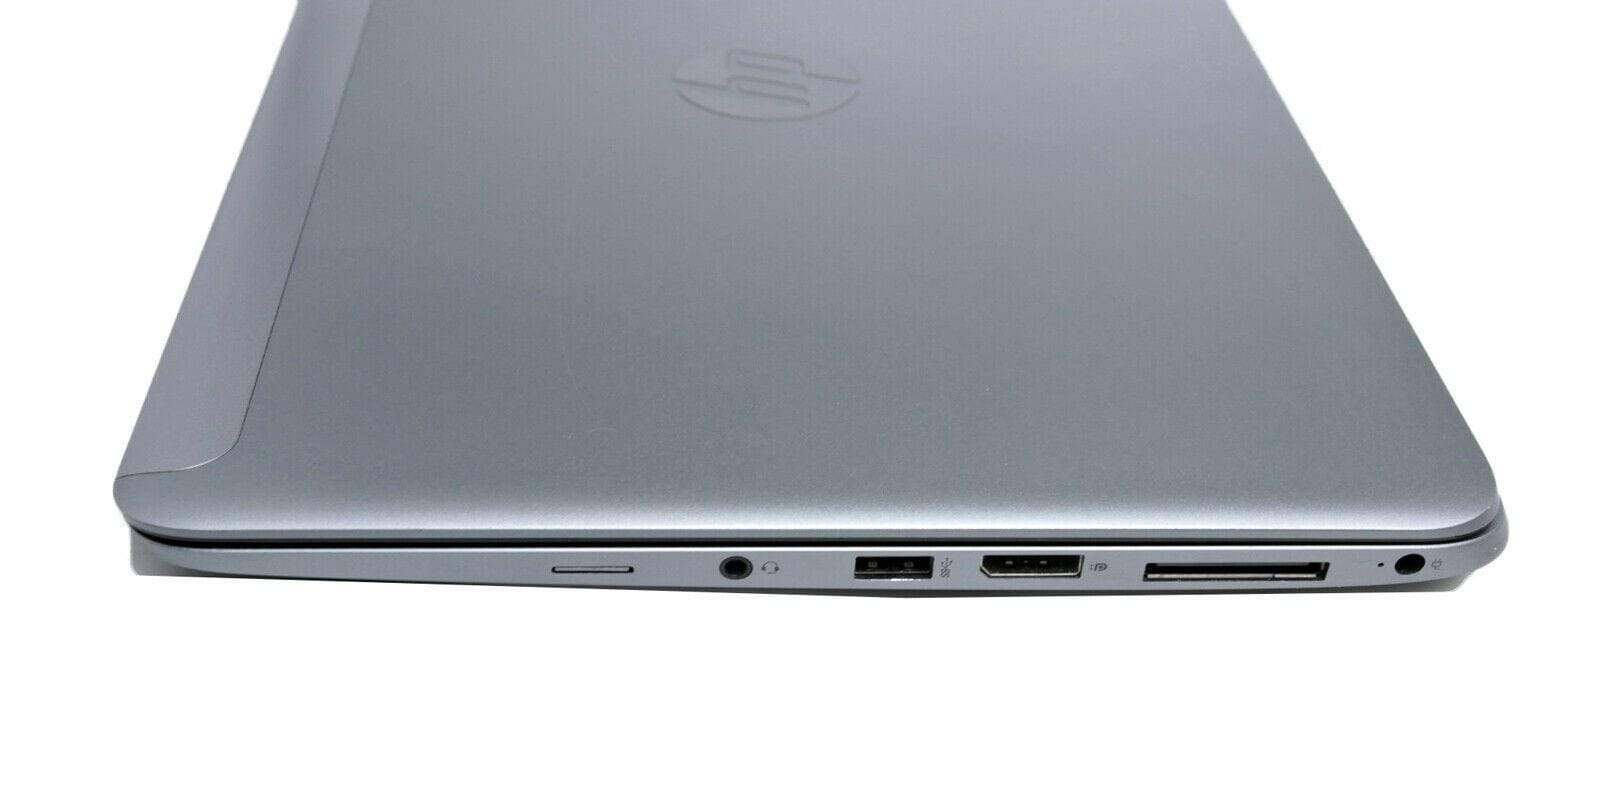 HP EliteBook 1040 Folio G1 UltraBook: Core i5, 8GB RAM, 120GB, VAT, Warranty - CruiseTech